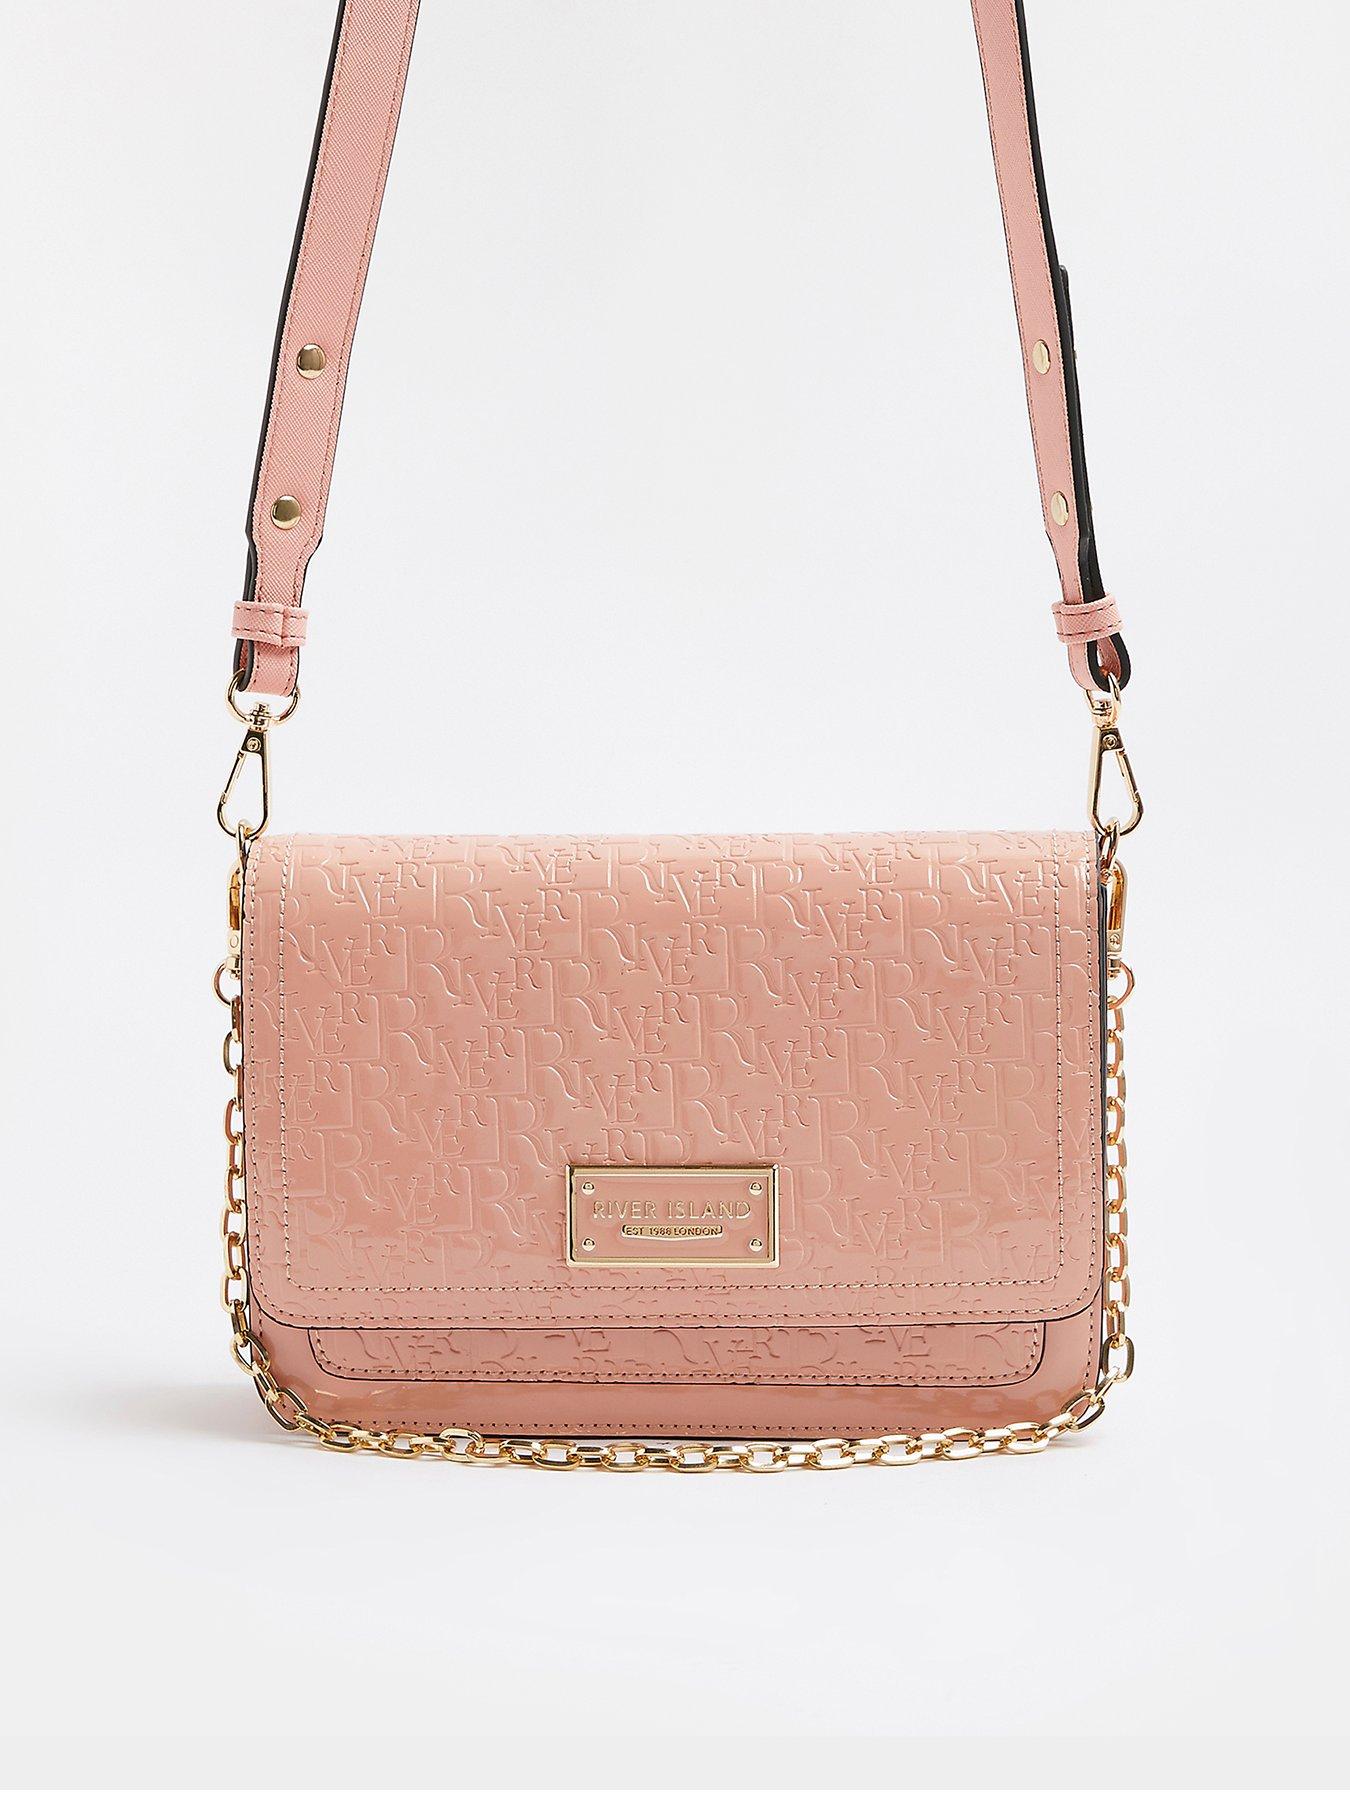 Details about   Women cotton shoulder bag cross body purse pink print size 11"x 11" new 